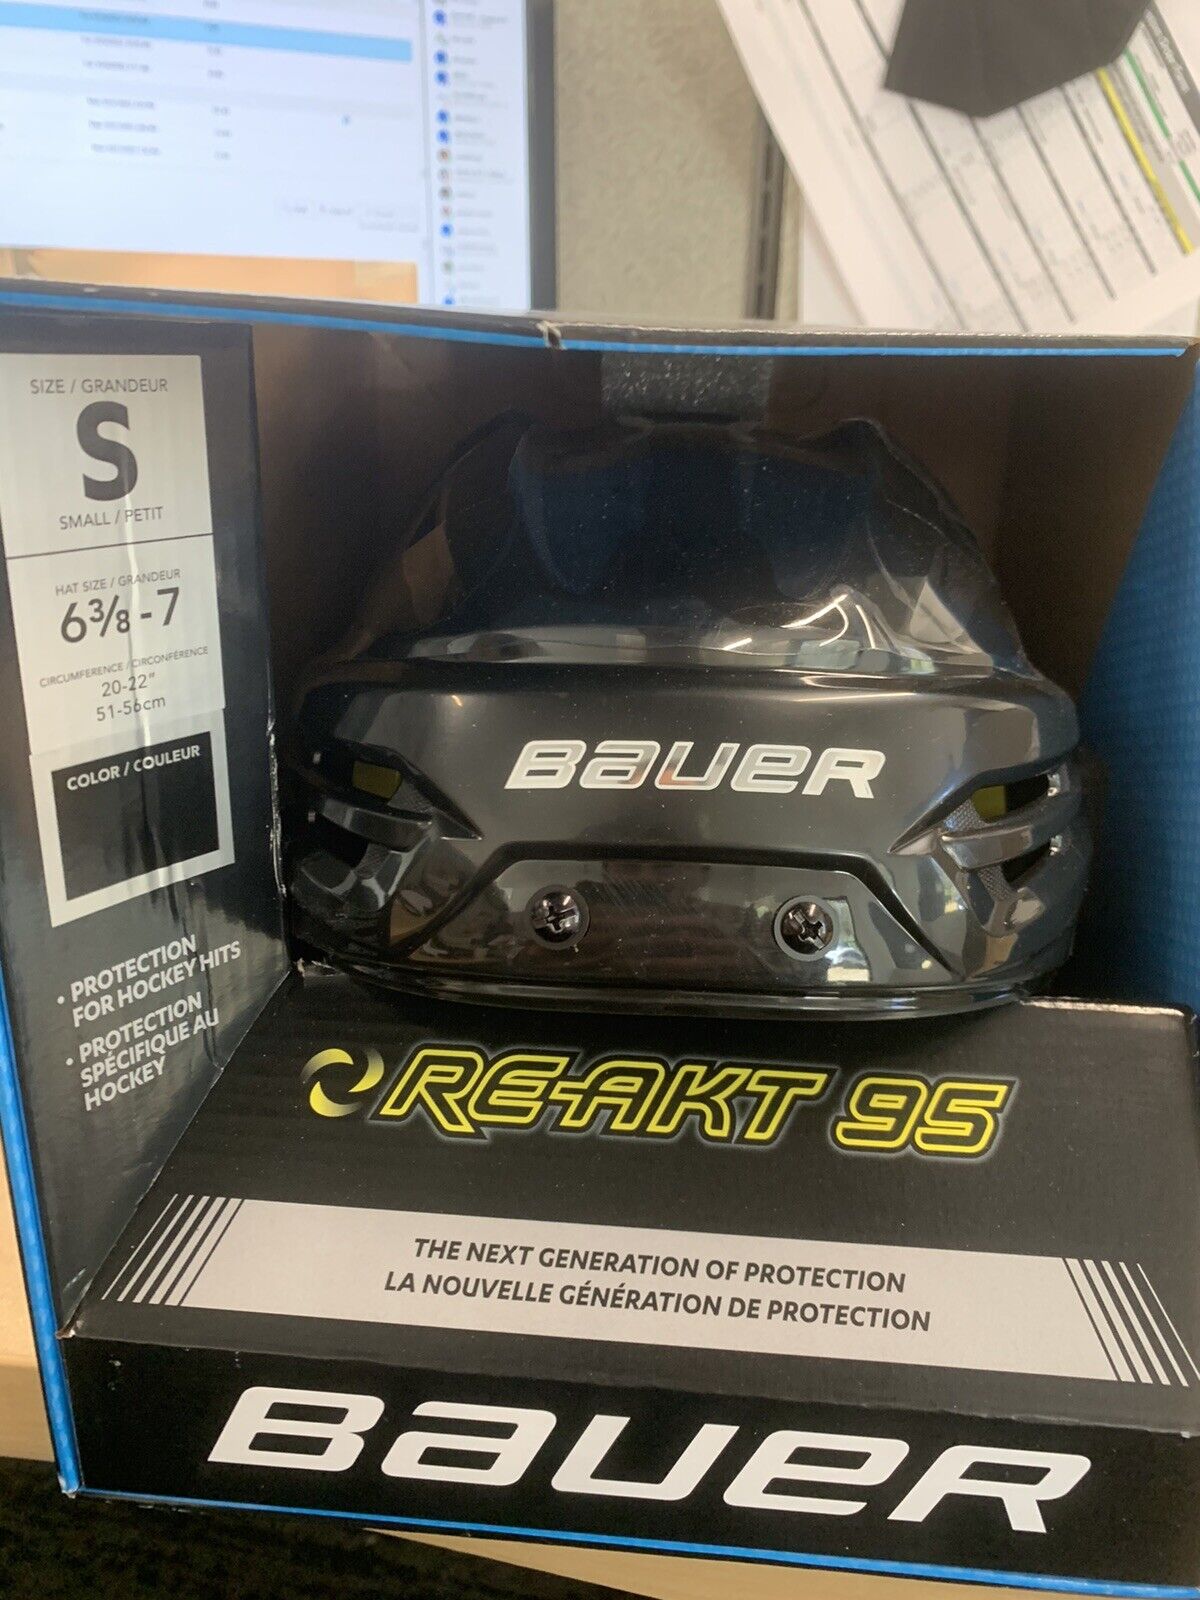 New in box Bauer re-akt 95 helmet Black Small